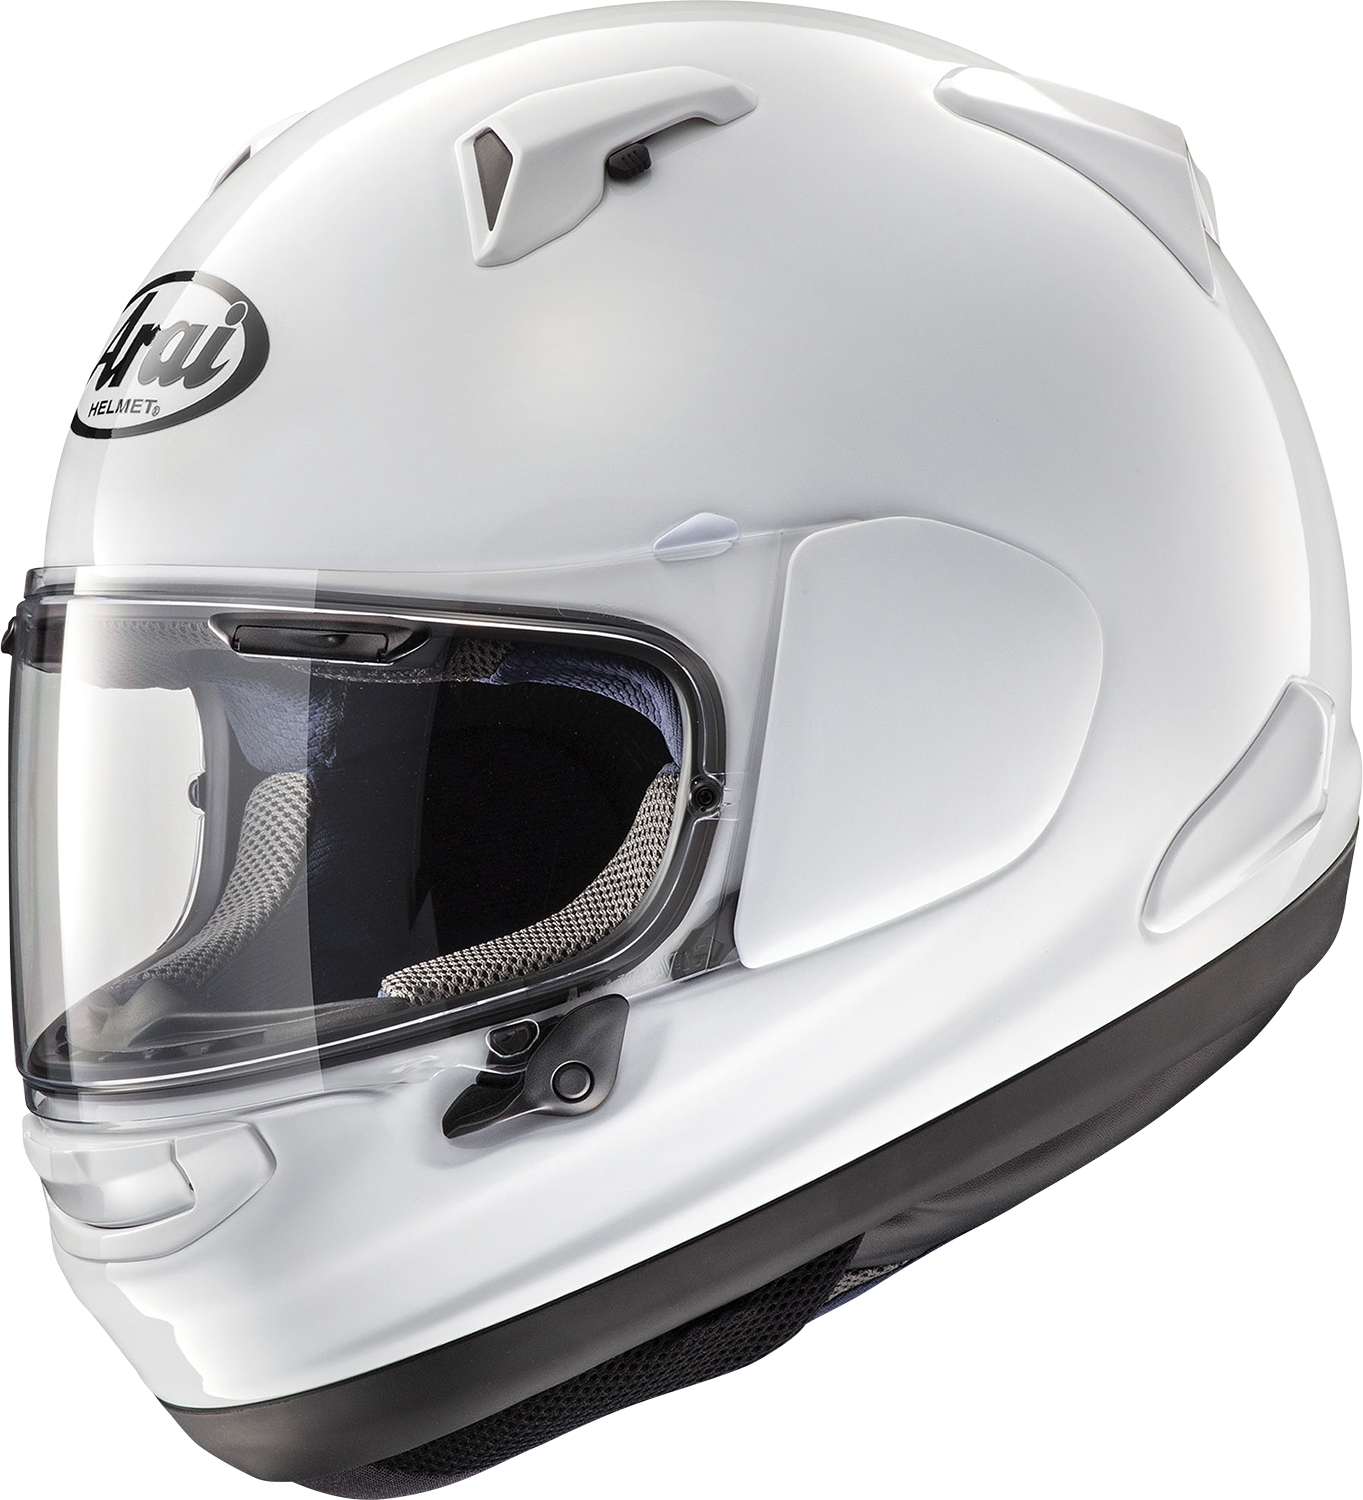 ARAI HELMETS Signet-X Helmet - White - Medium 0101-15994